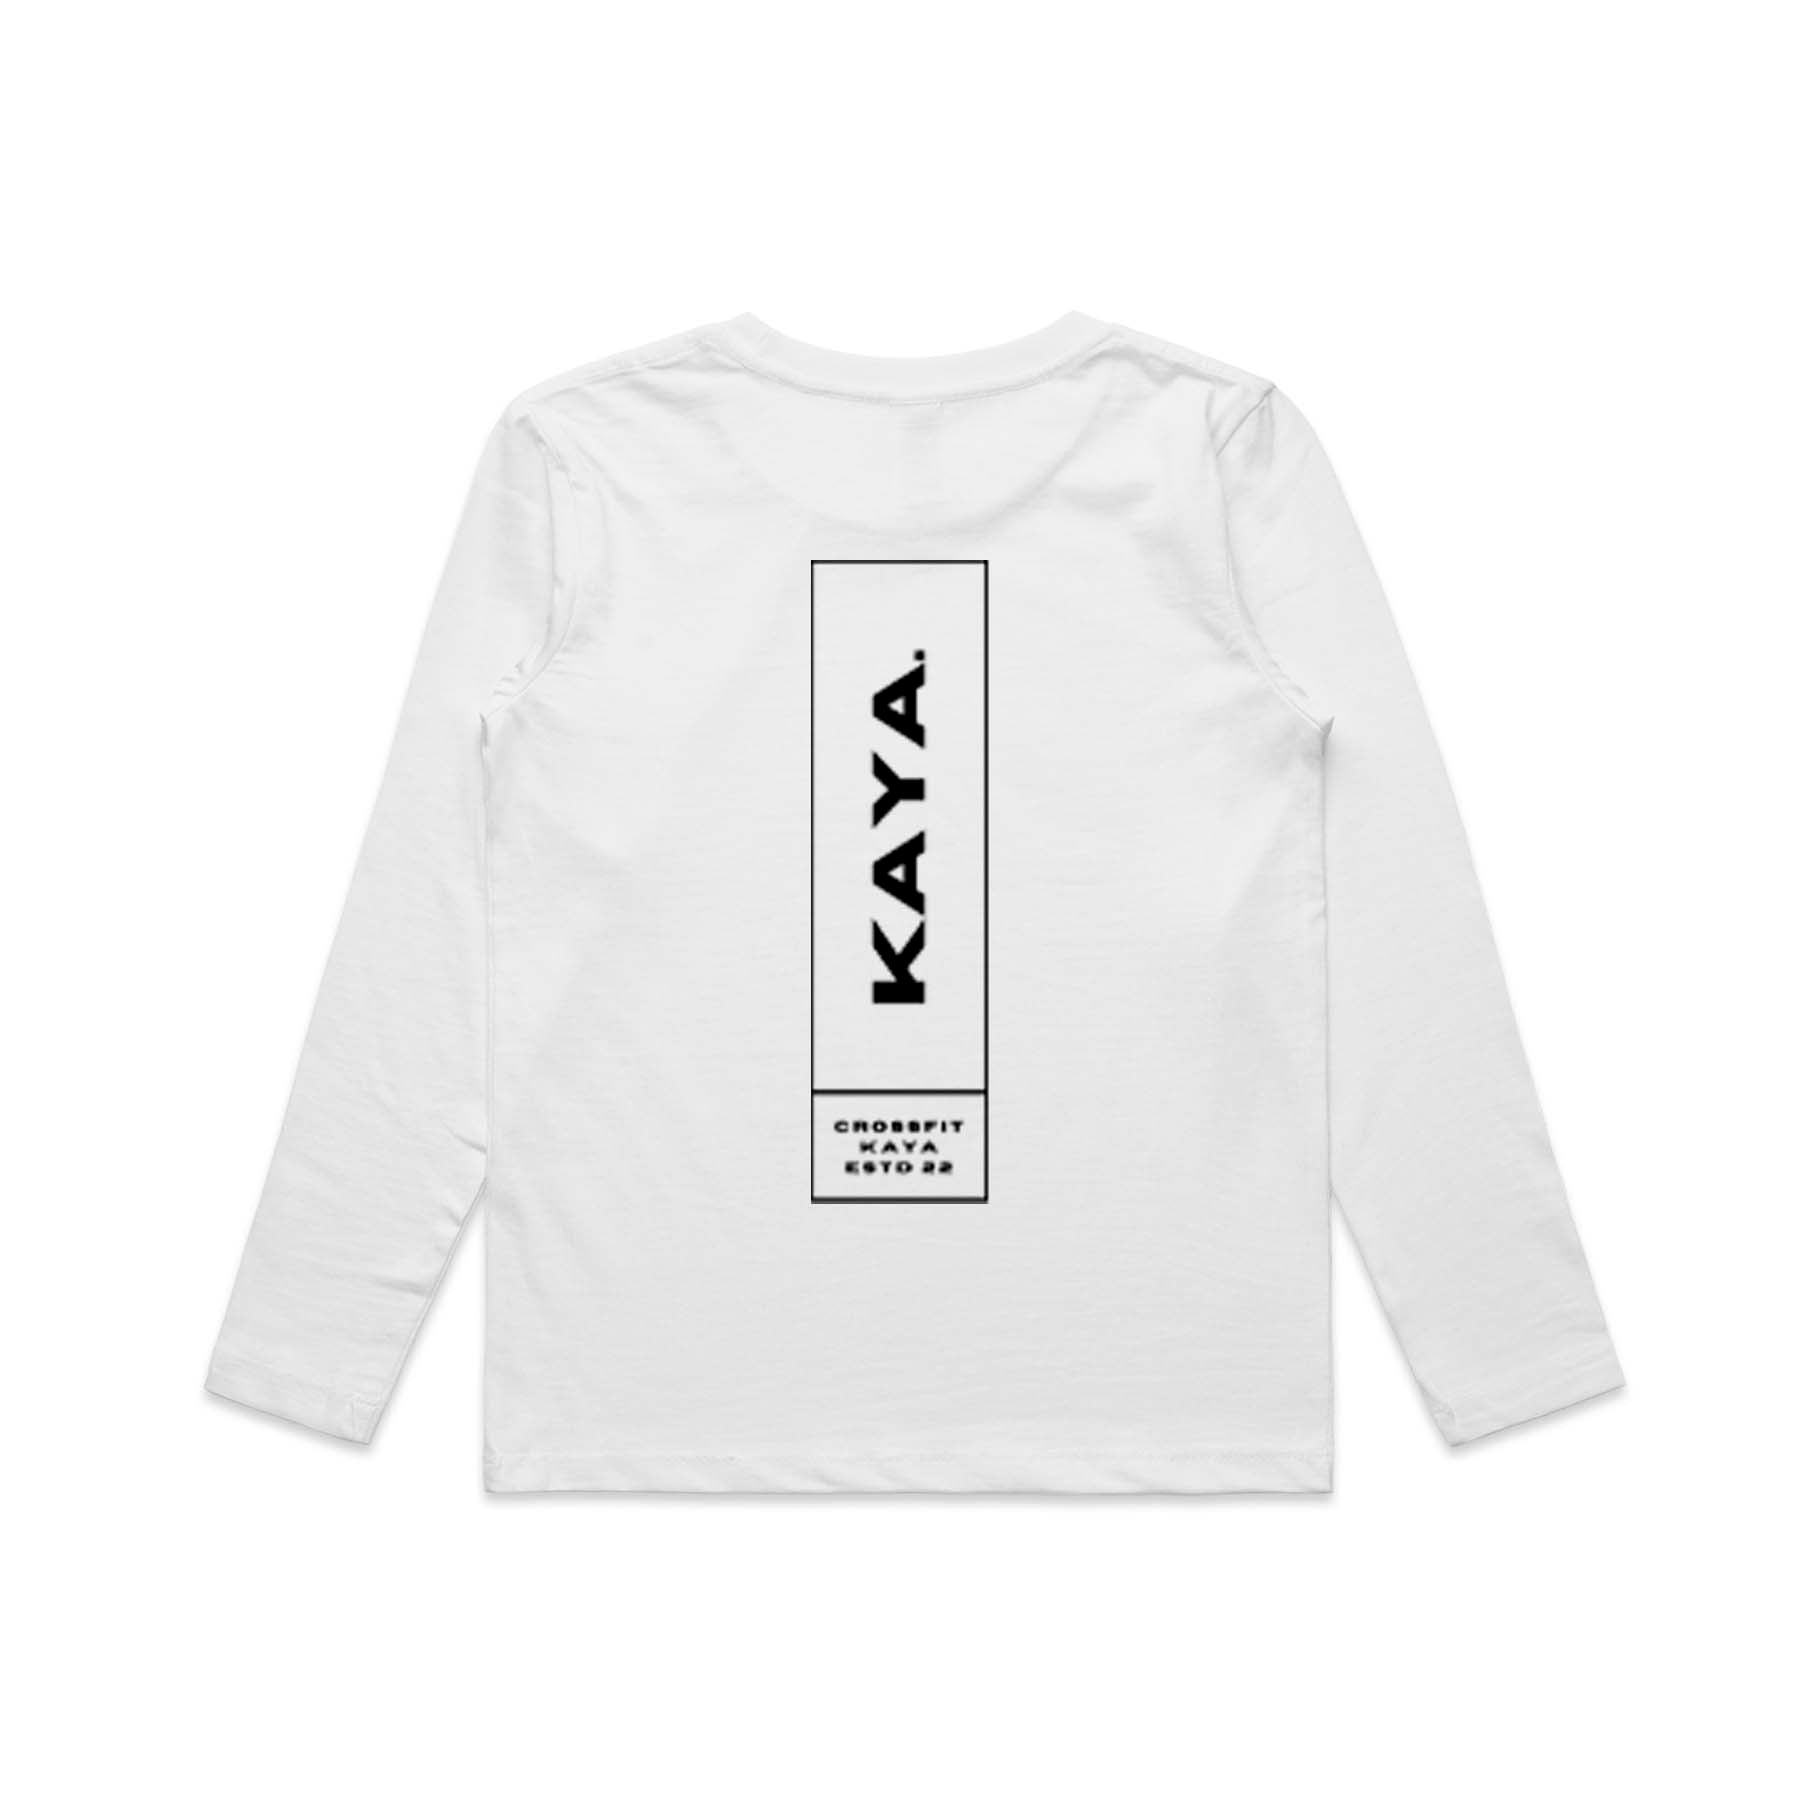 Kaya Crossfit Kids Double Sided T-shirt long sleeve Design 2